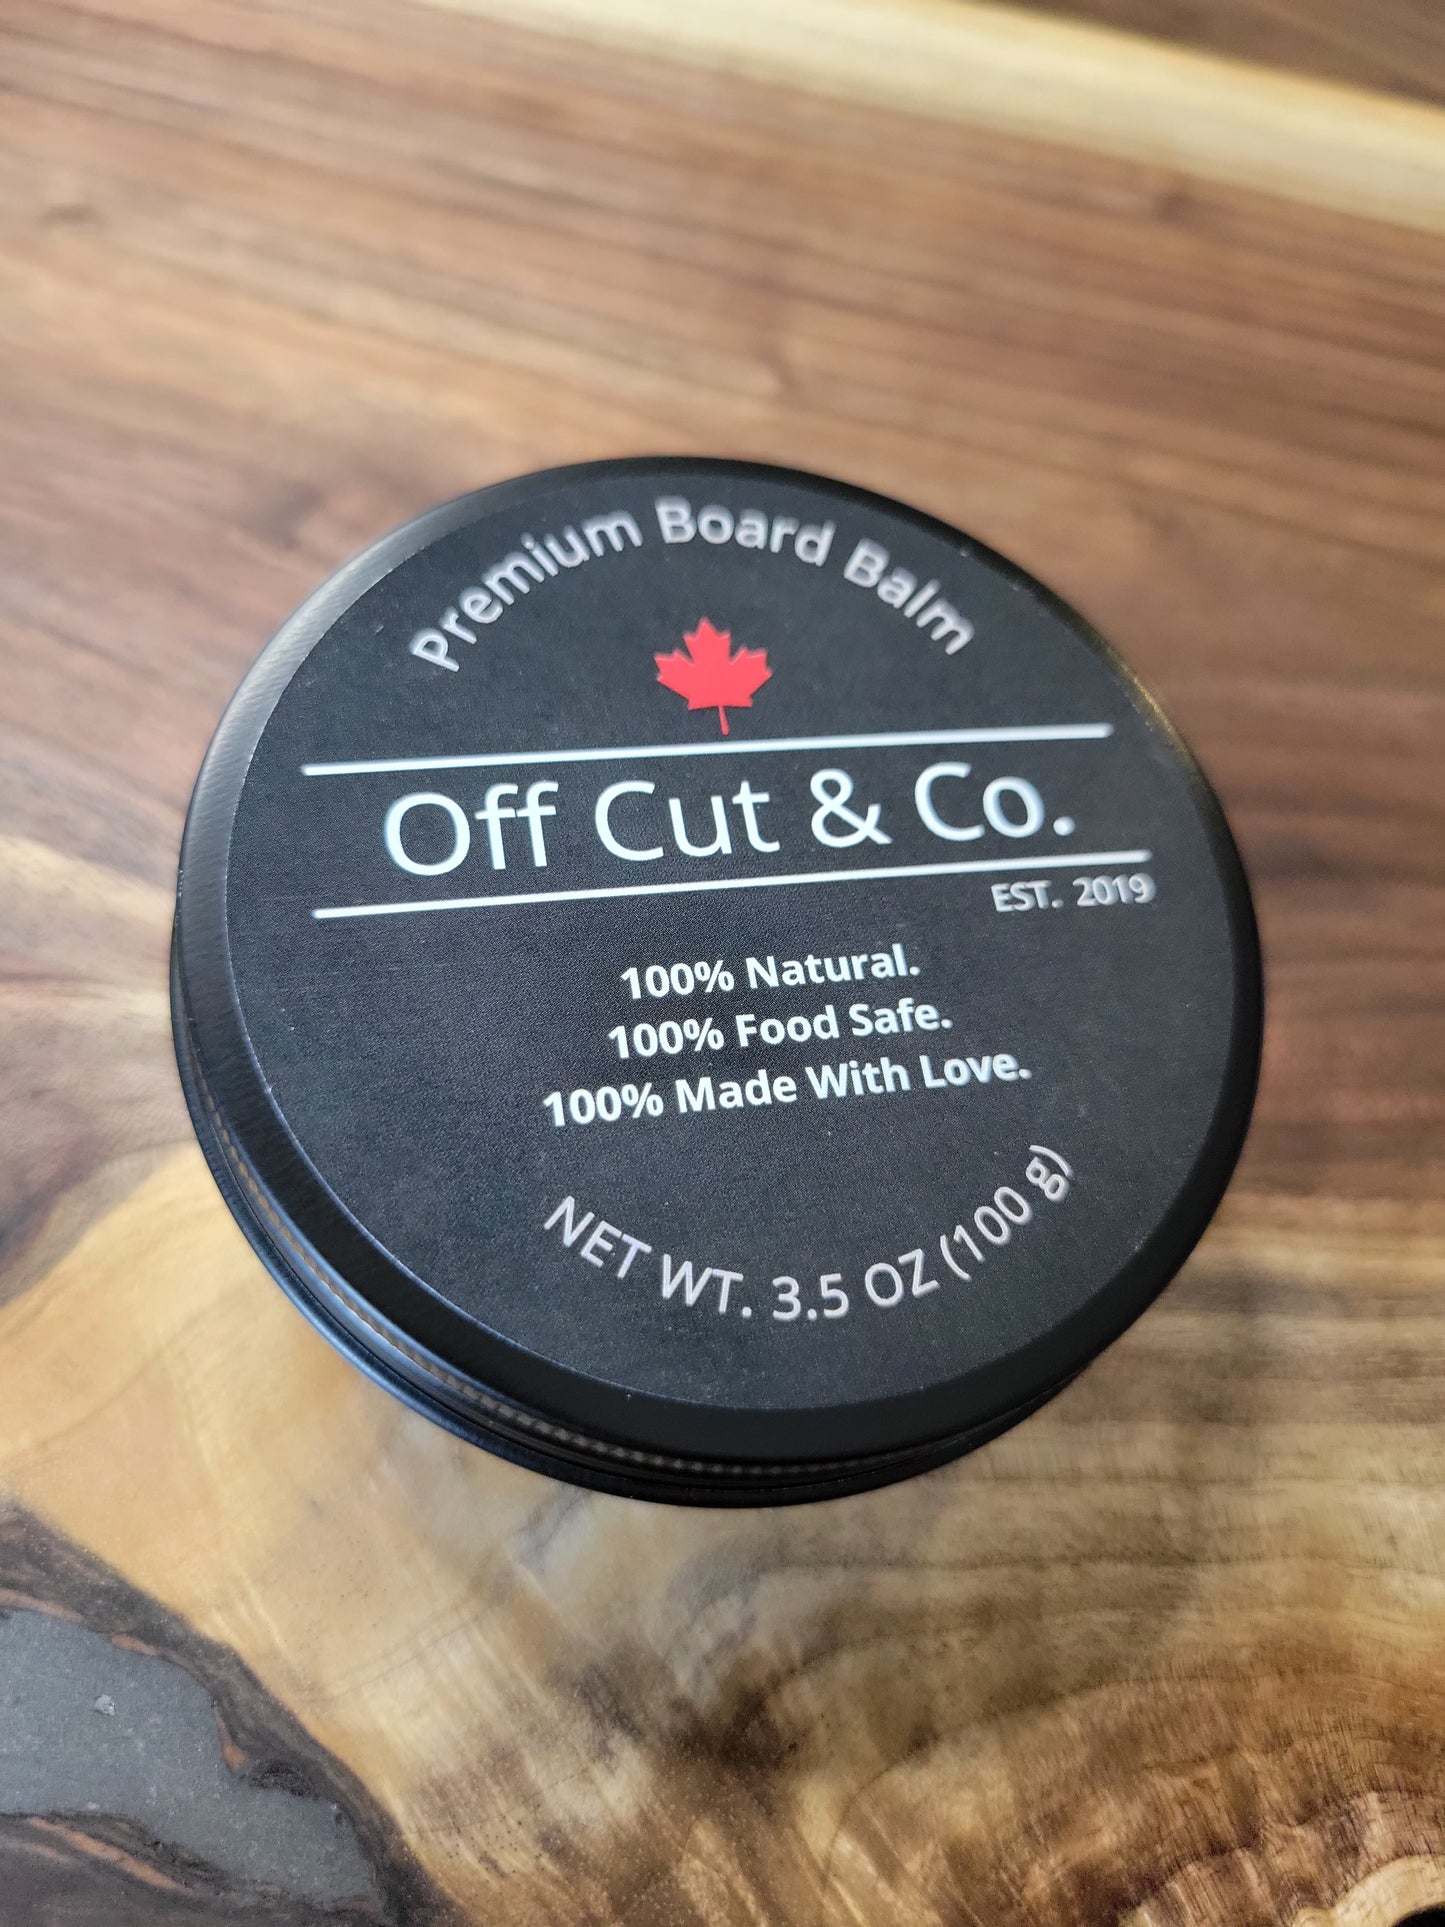 Off Cut & Co. Premium Board Balm - Premium Canadian Beeswax and Mineral Oil Cutting Board Balm - (3.5 oz/ 100g) - Each